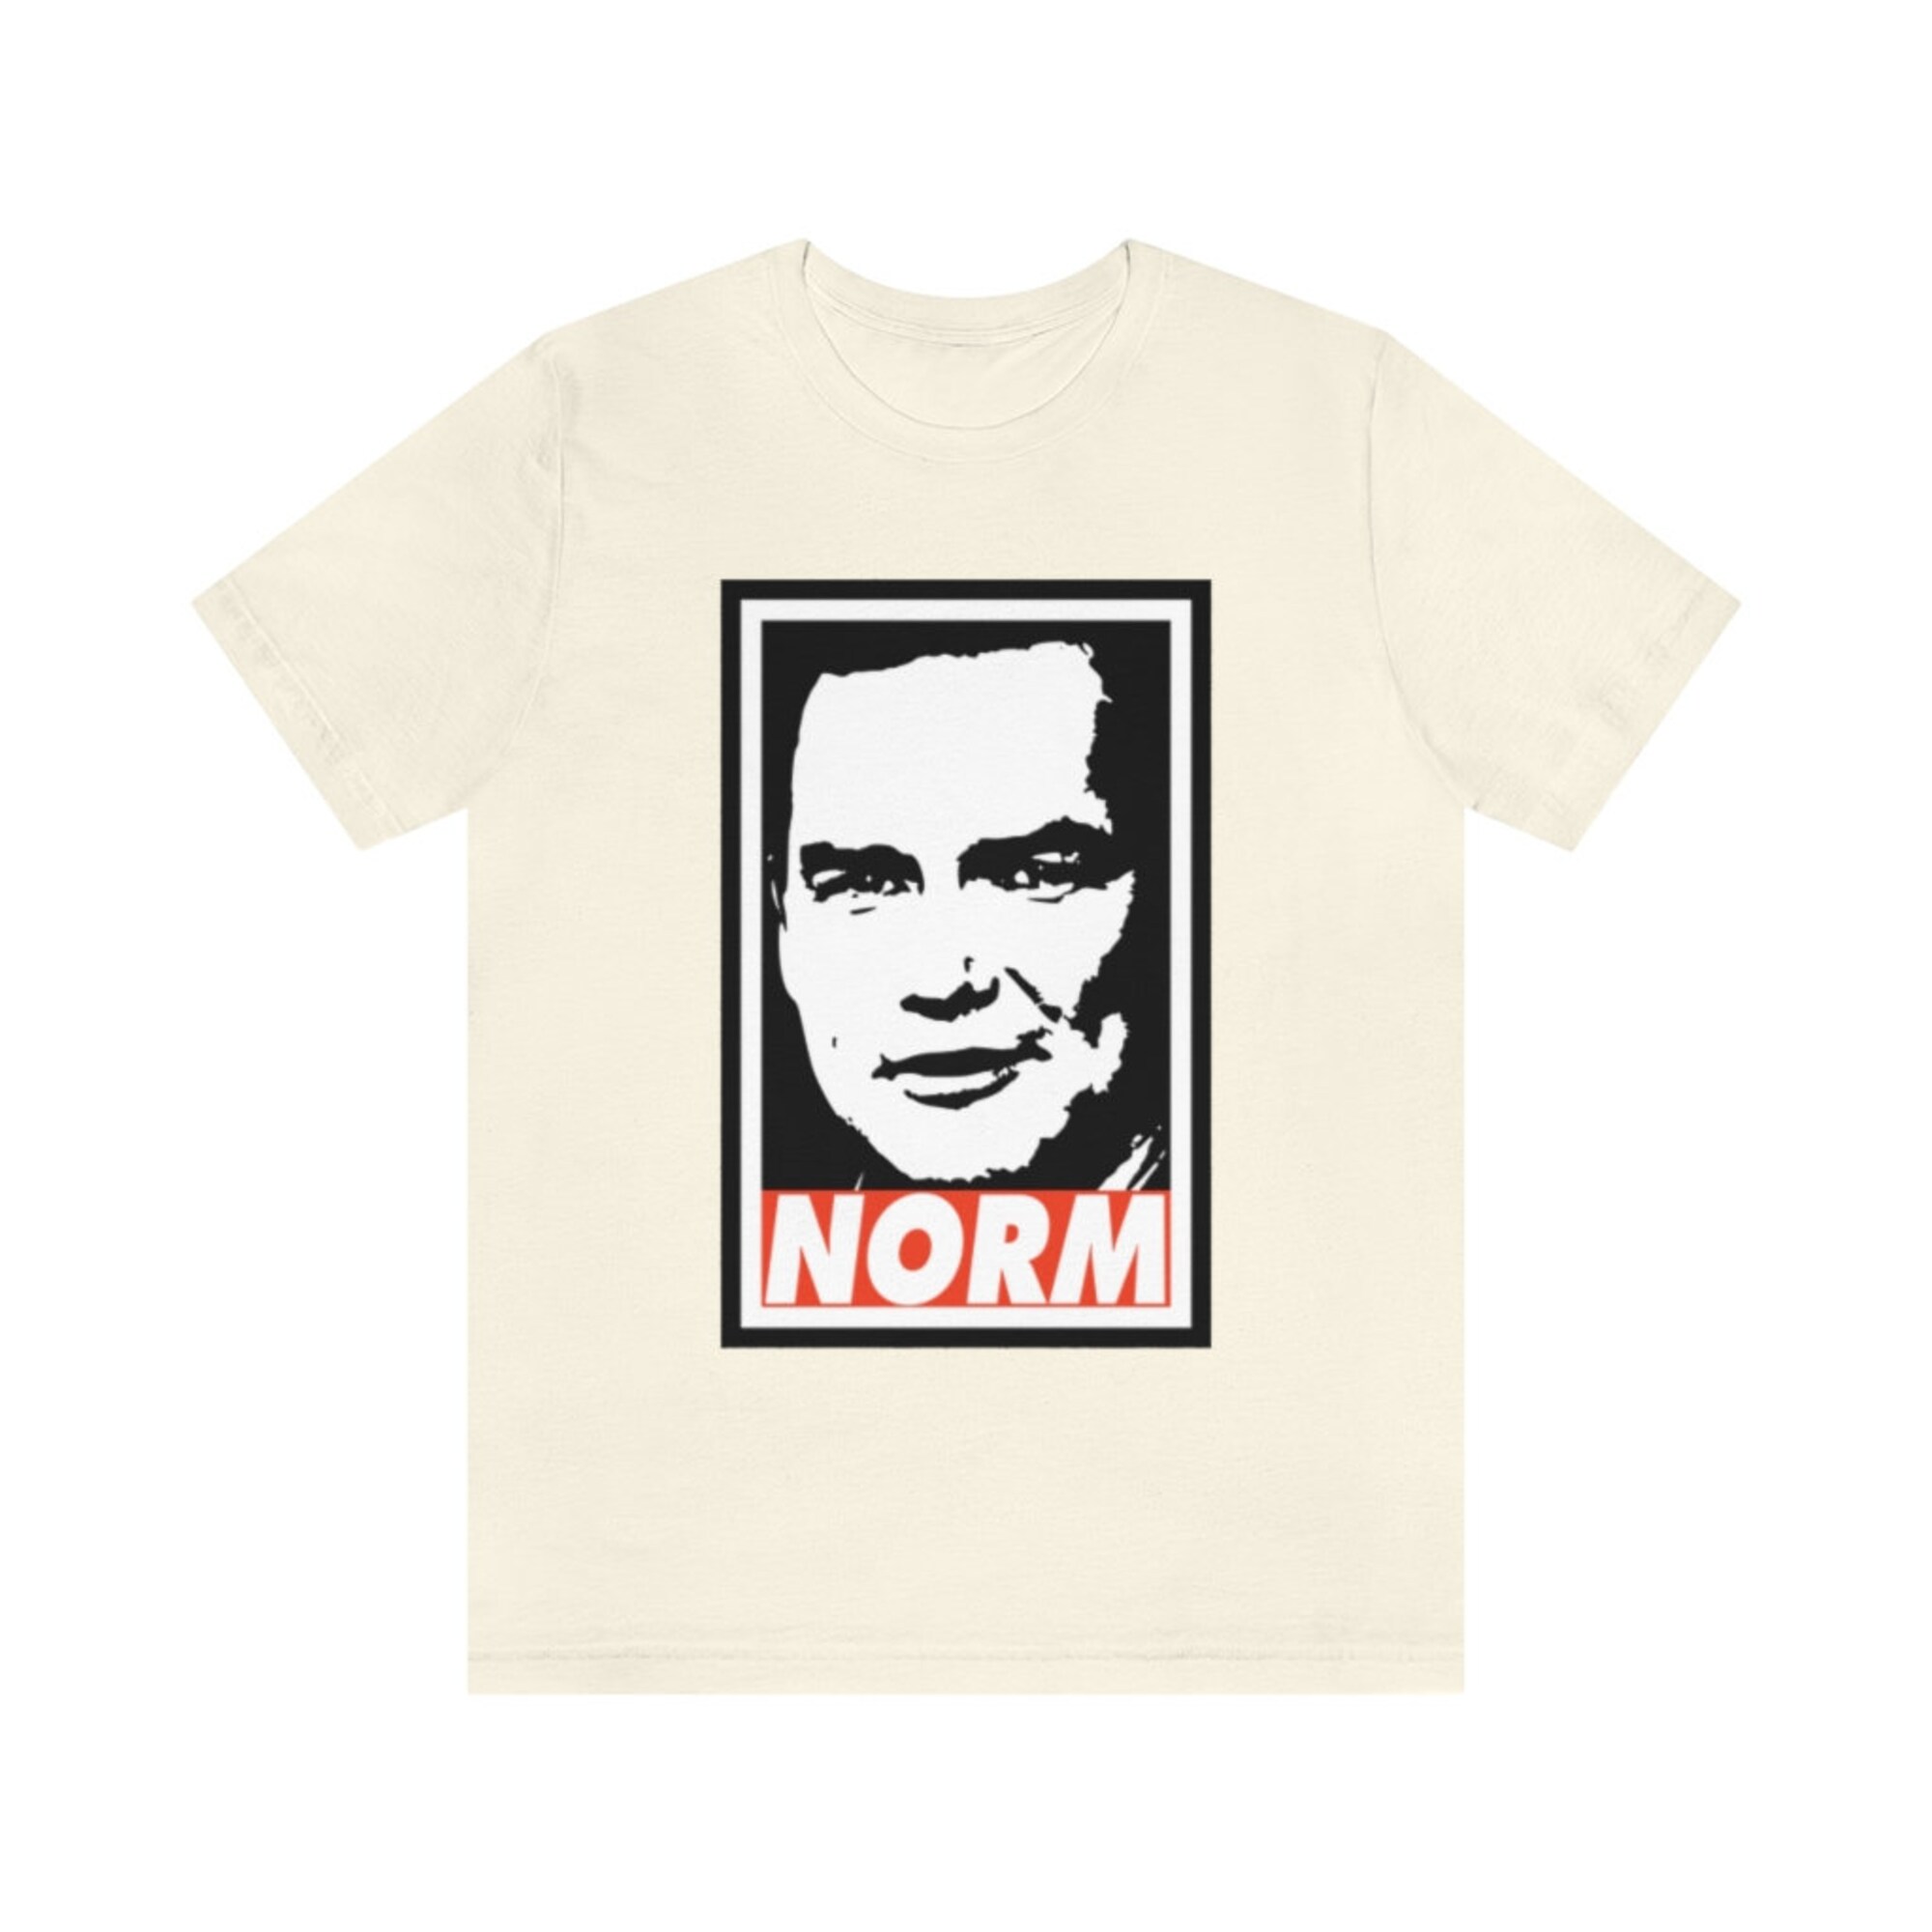 Discover Unisex Norm Macdonald Shirt, Norm Macdonald Tshirt, Stand-up comedian Norm Macdonald